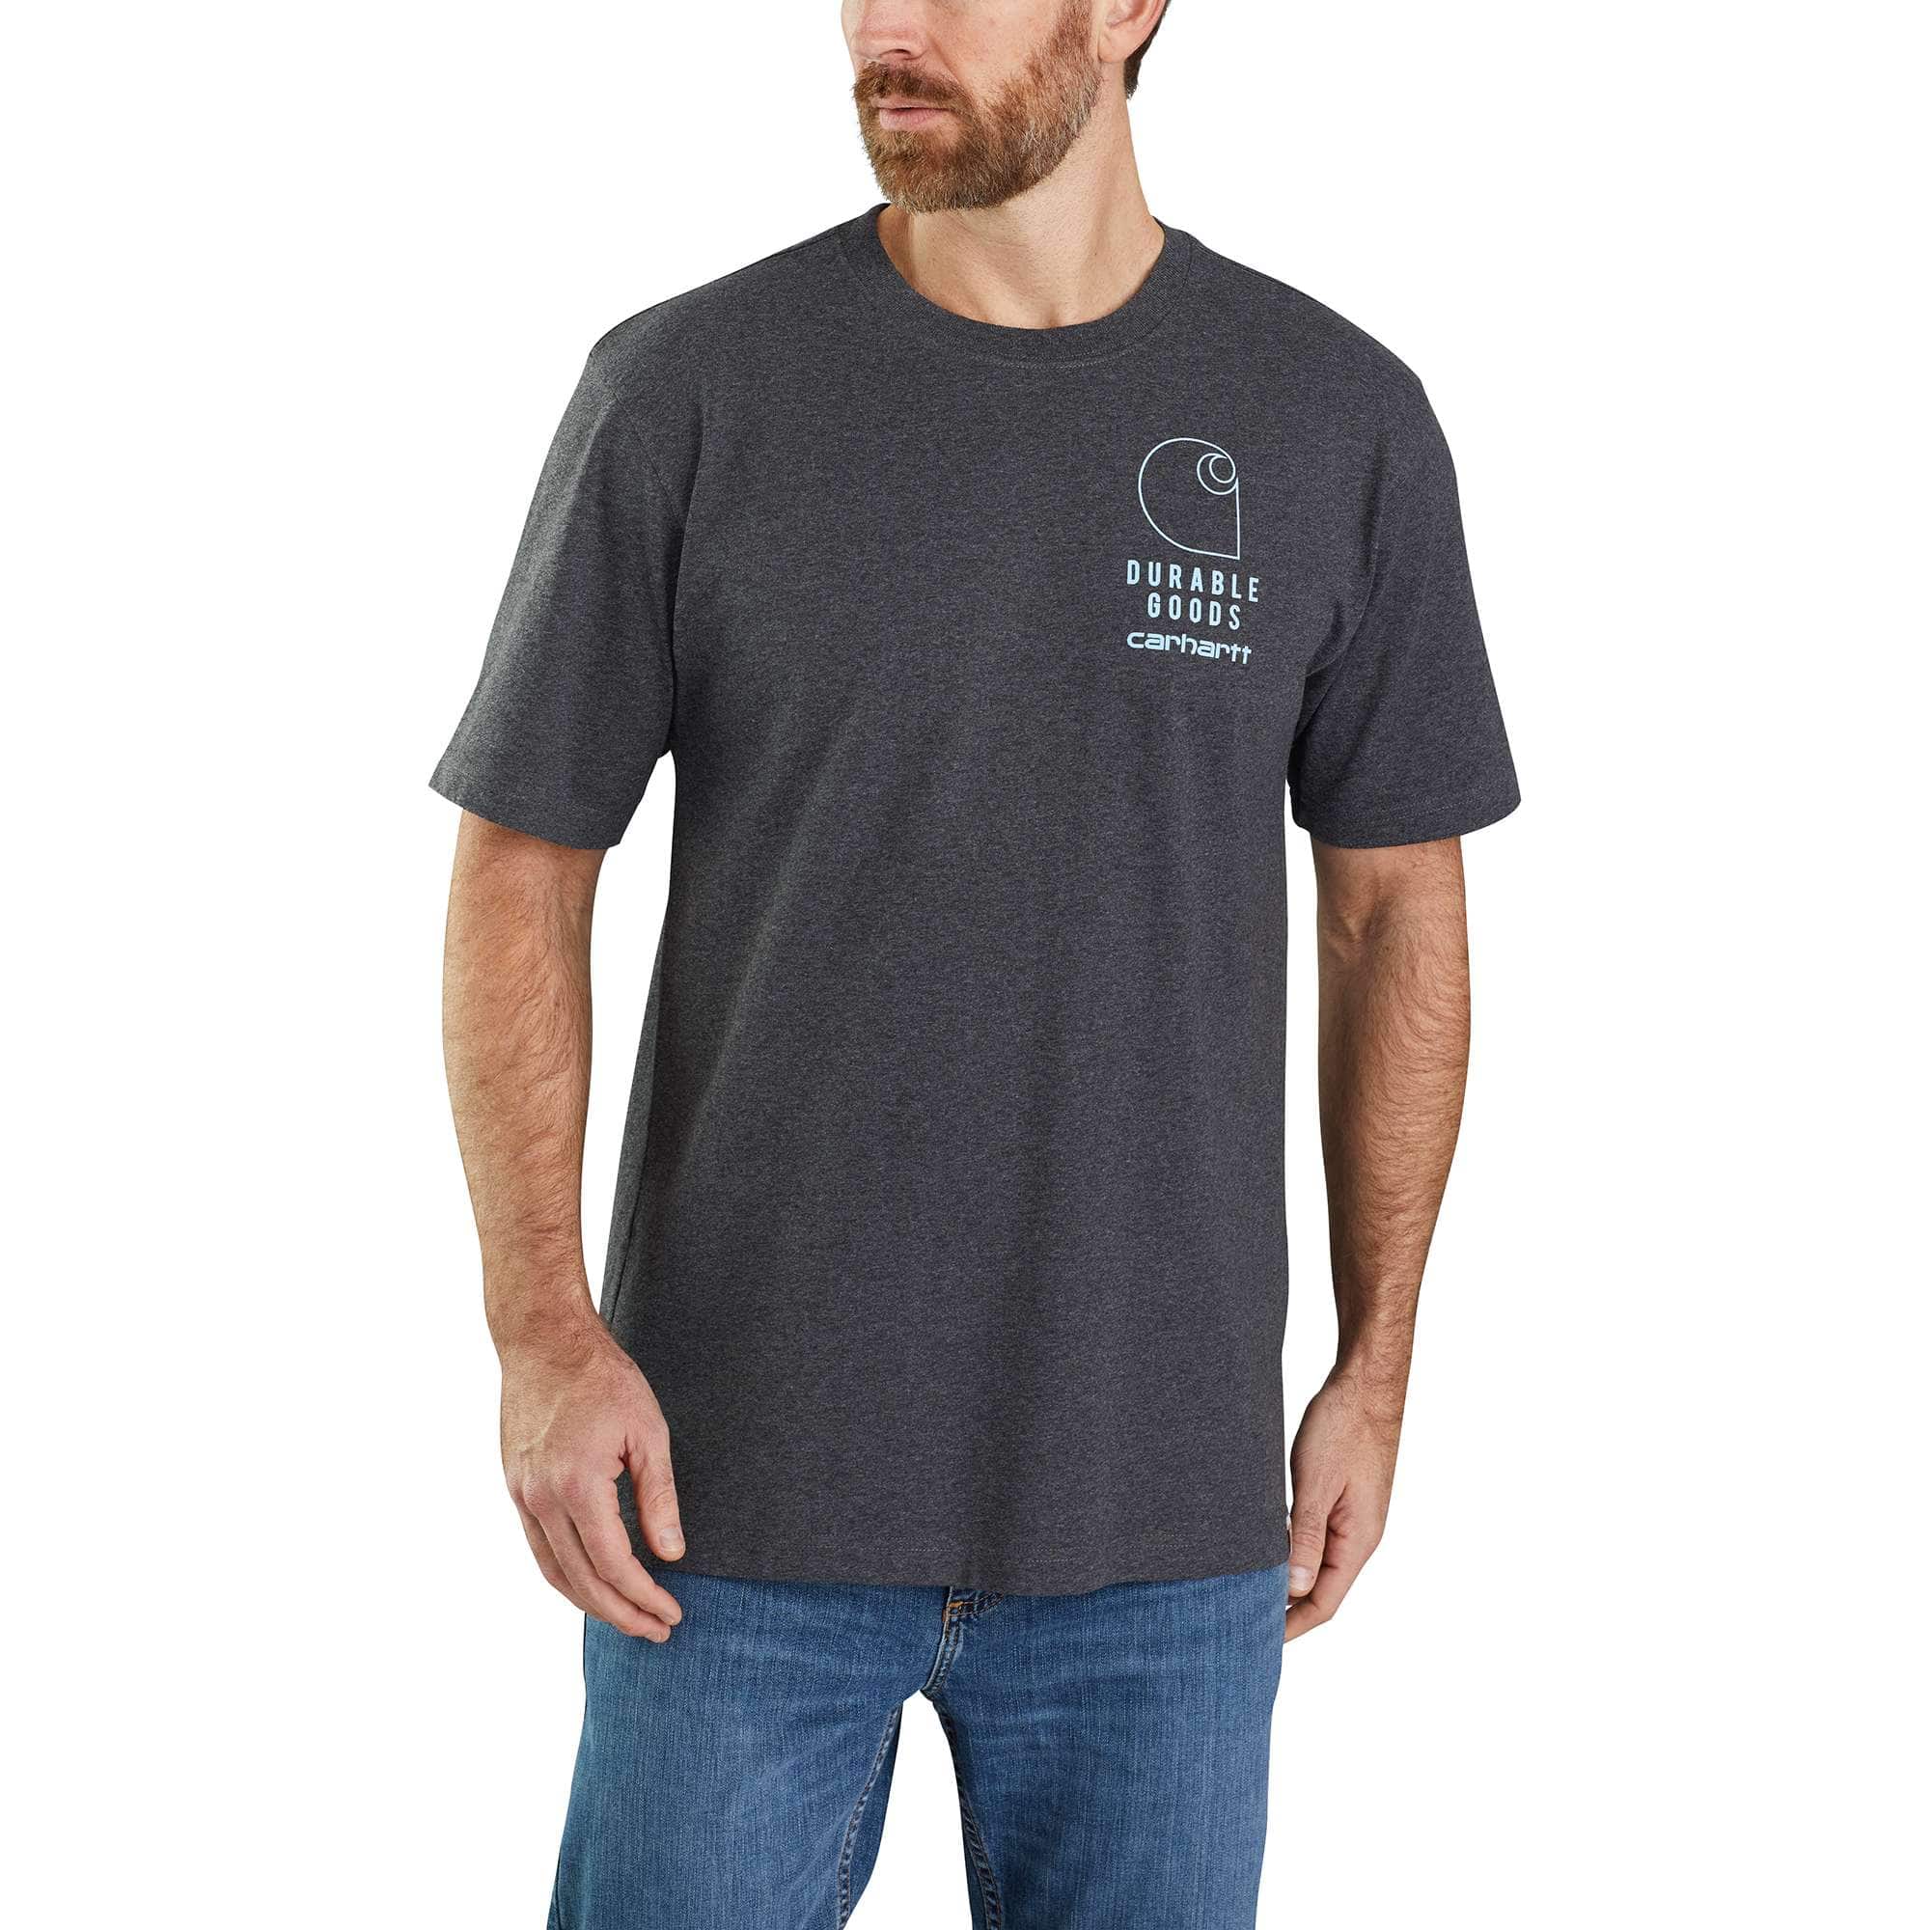 Carhartt Men's Carbon Heather Loose Fit Heavyweight Short-Sleeve Durable Goods Graphic T-Shirt